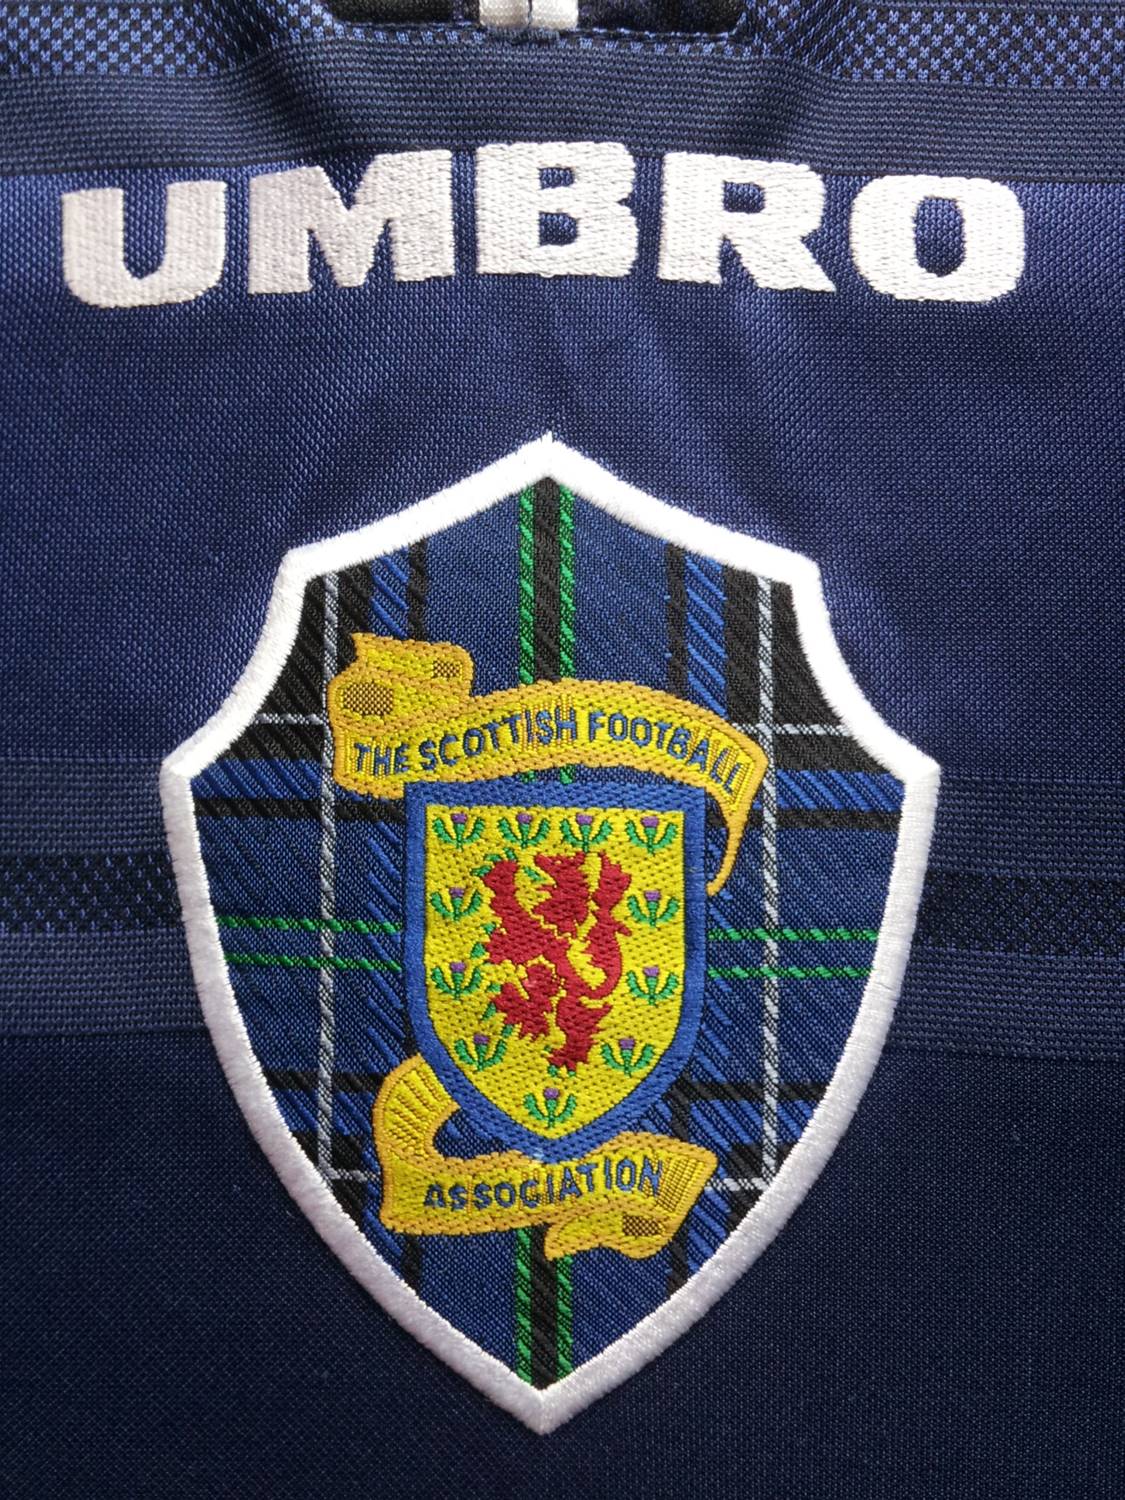 Scotland Home football shirt 1998 - 2000.